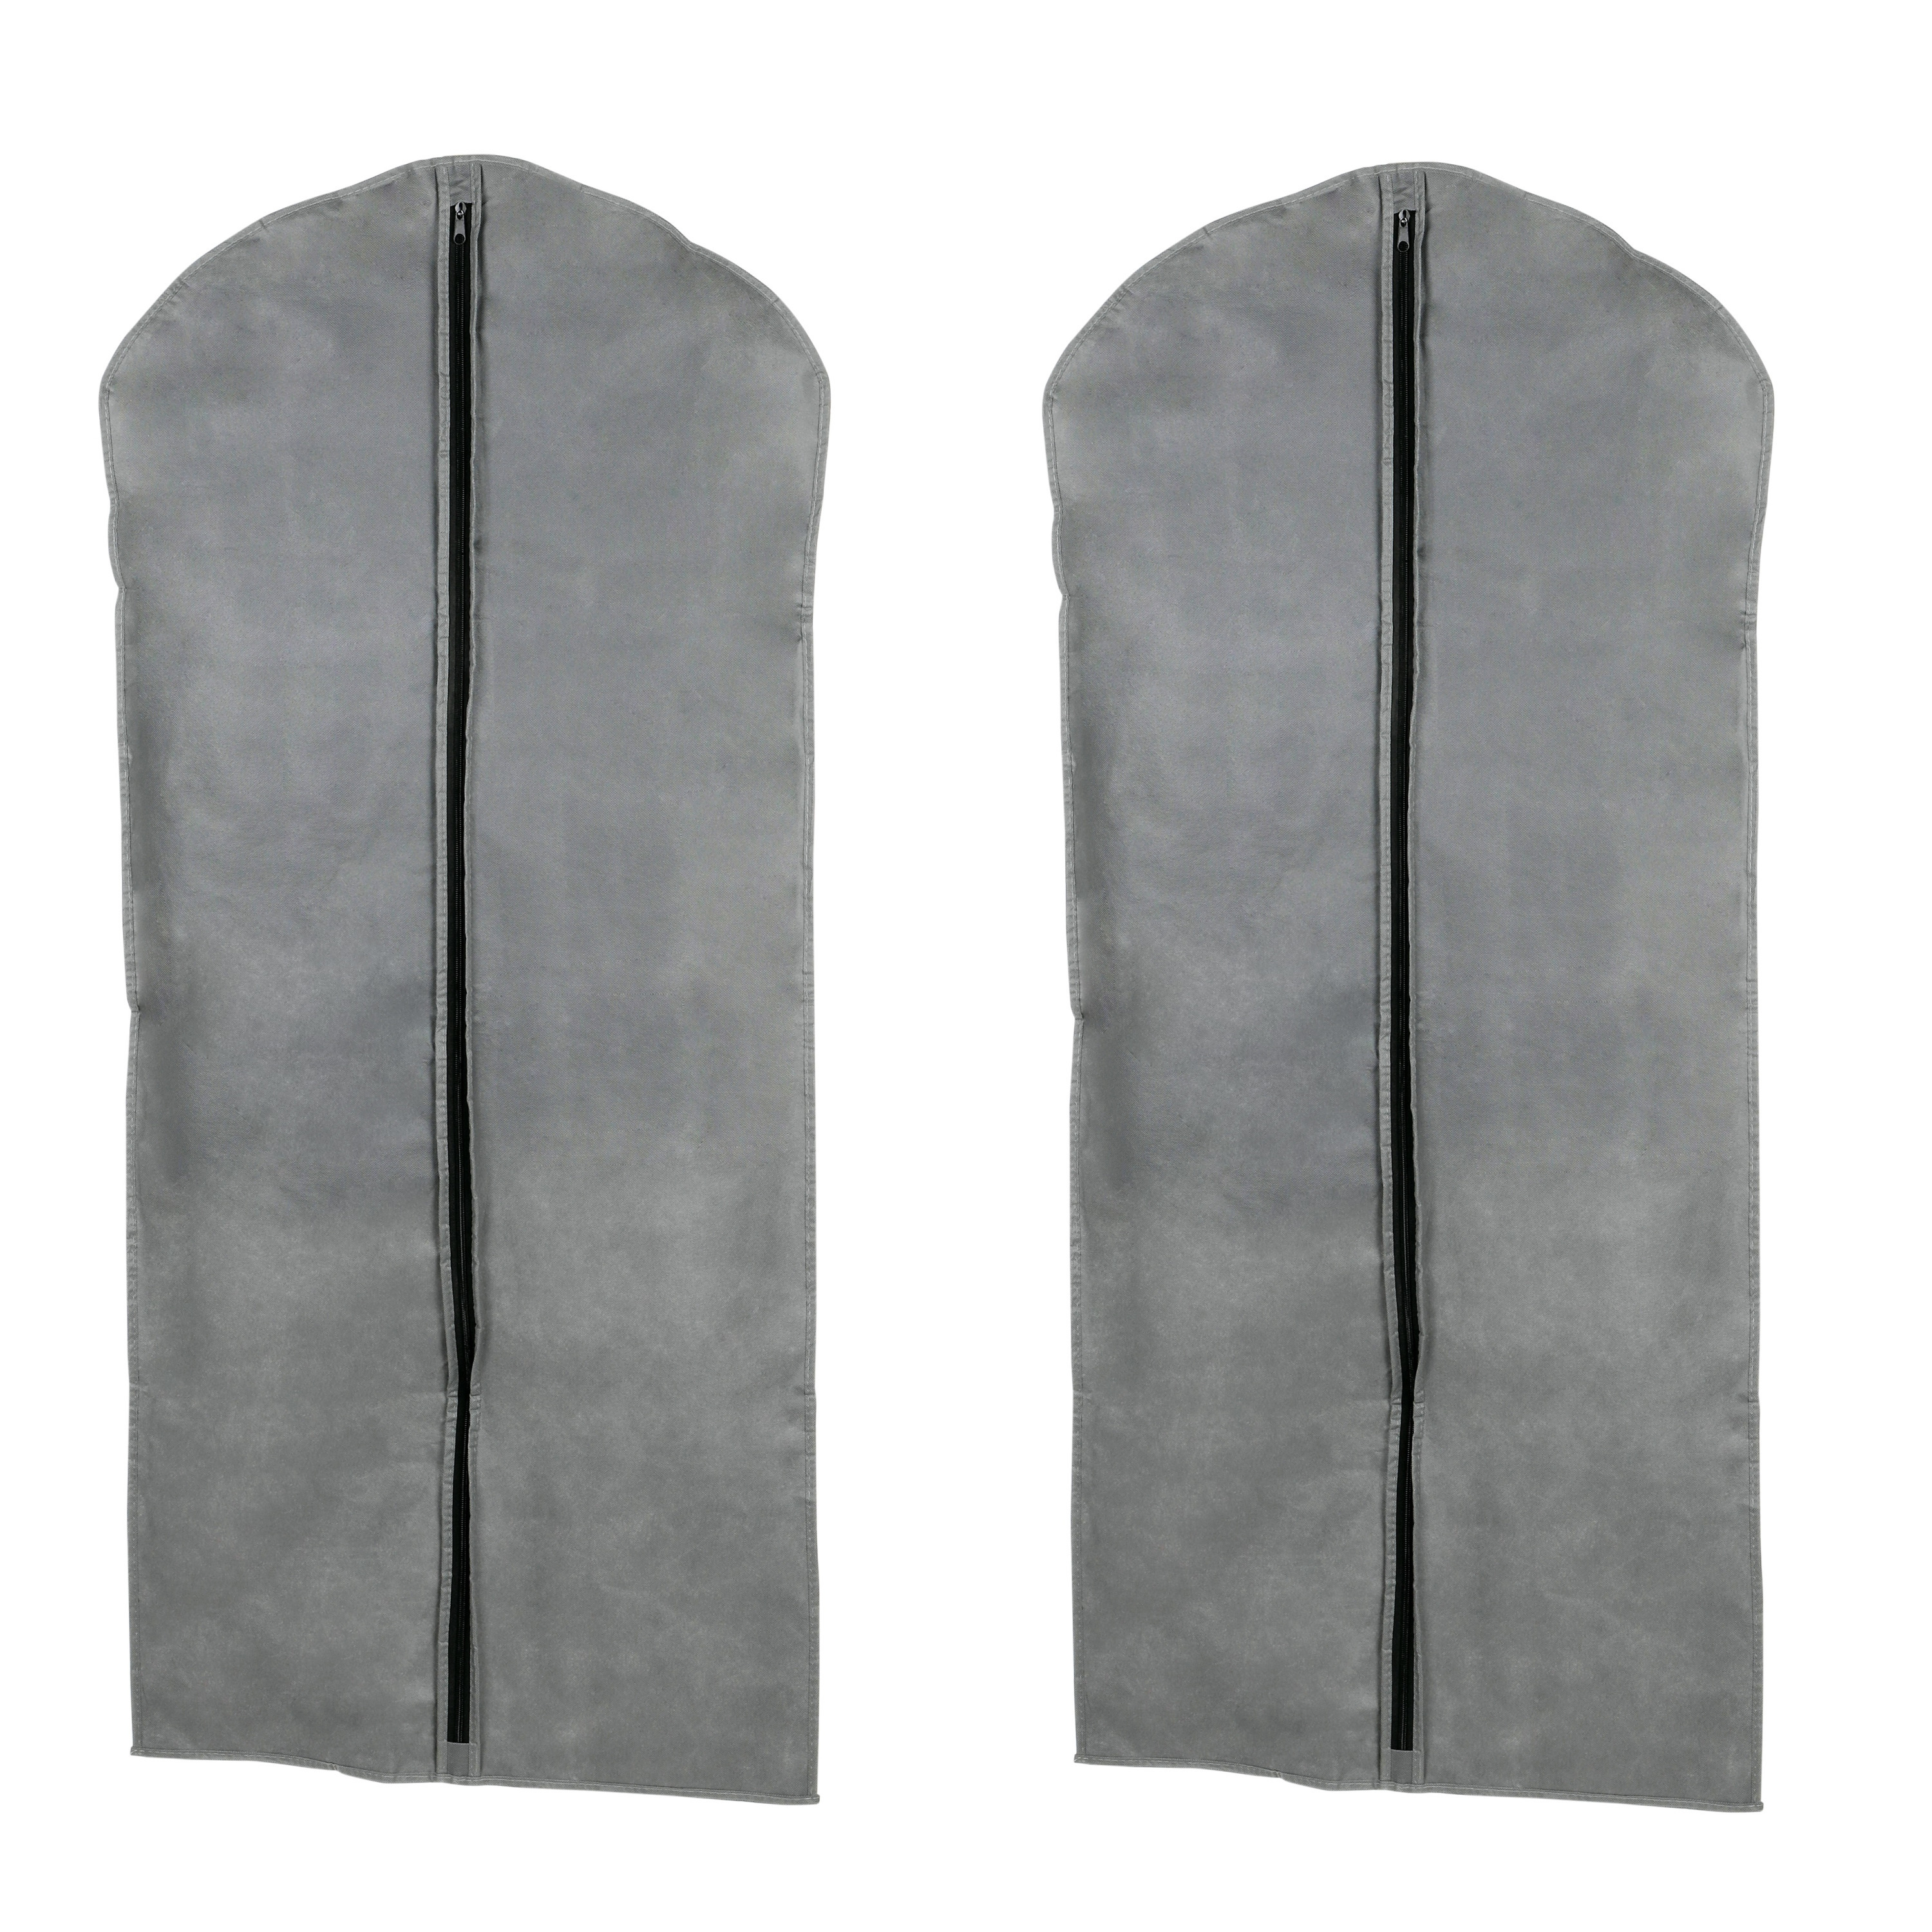 Set van 10x stuks grijze kledinghoes 60 x 137 cm